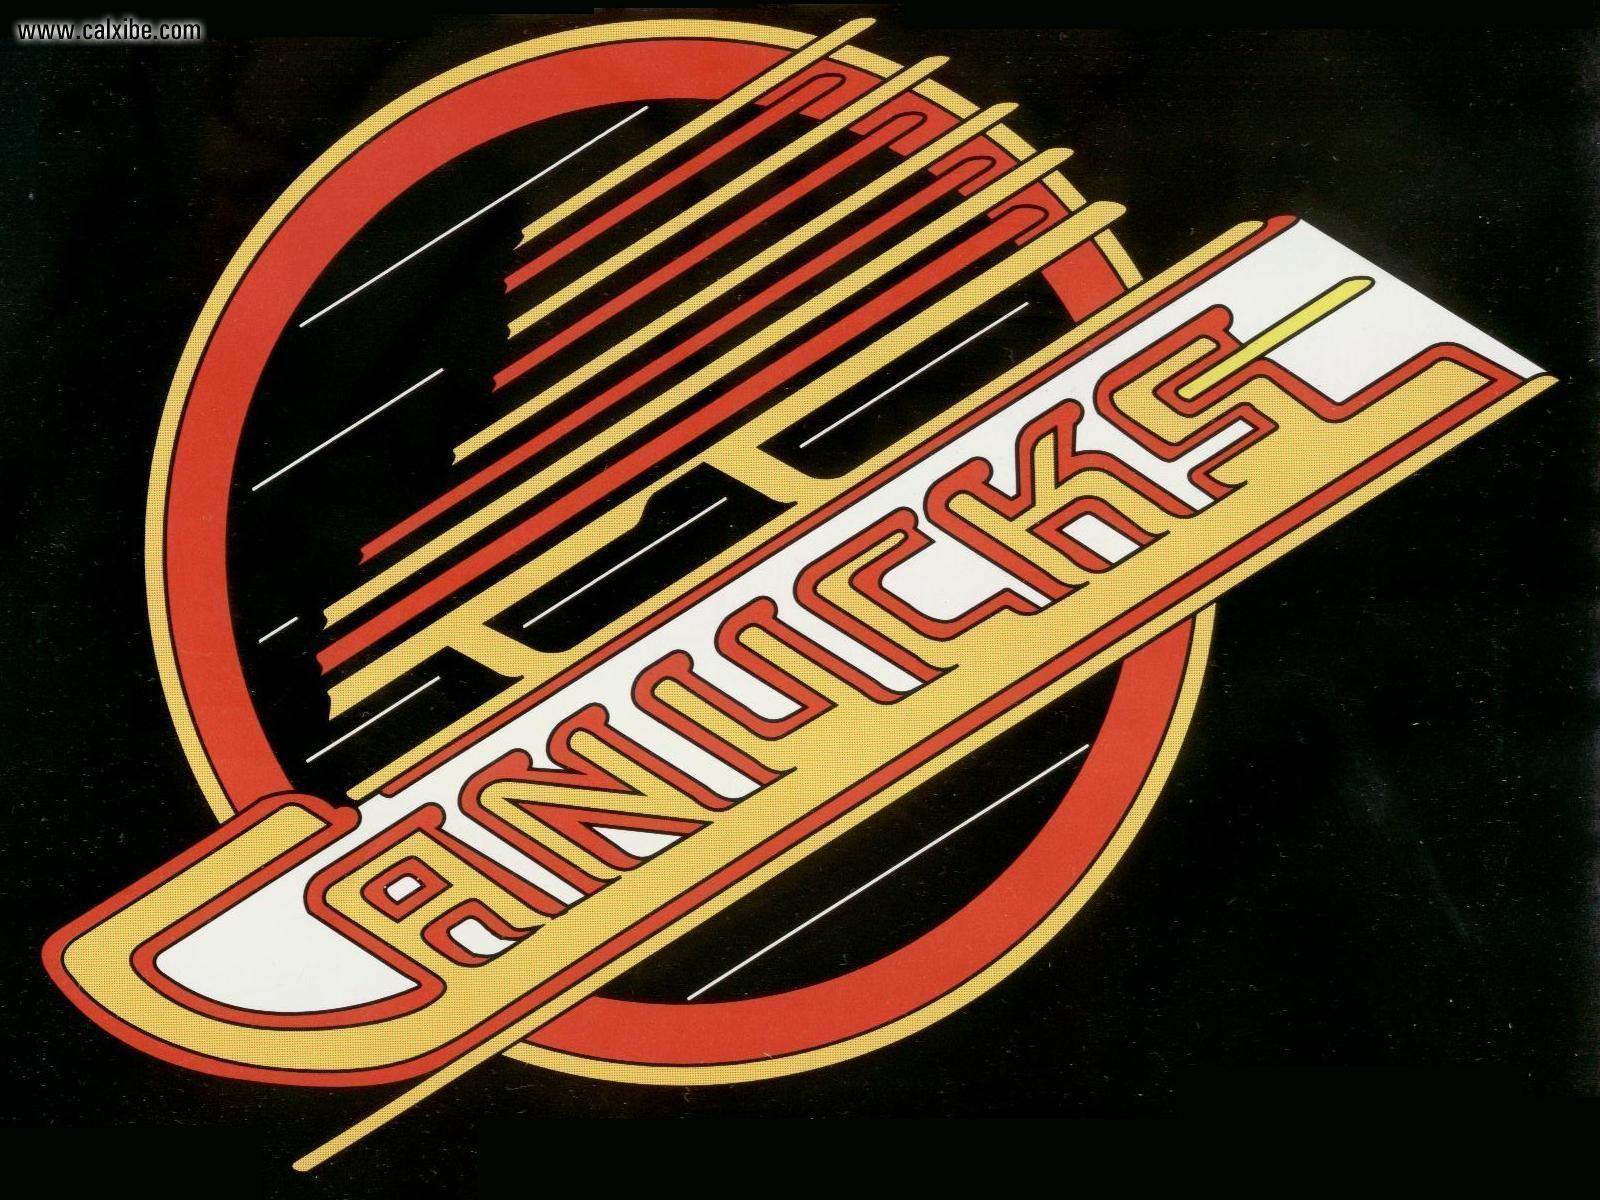 Canucks Logo / Members of '94 Canucks team reuniting this spring NEWS